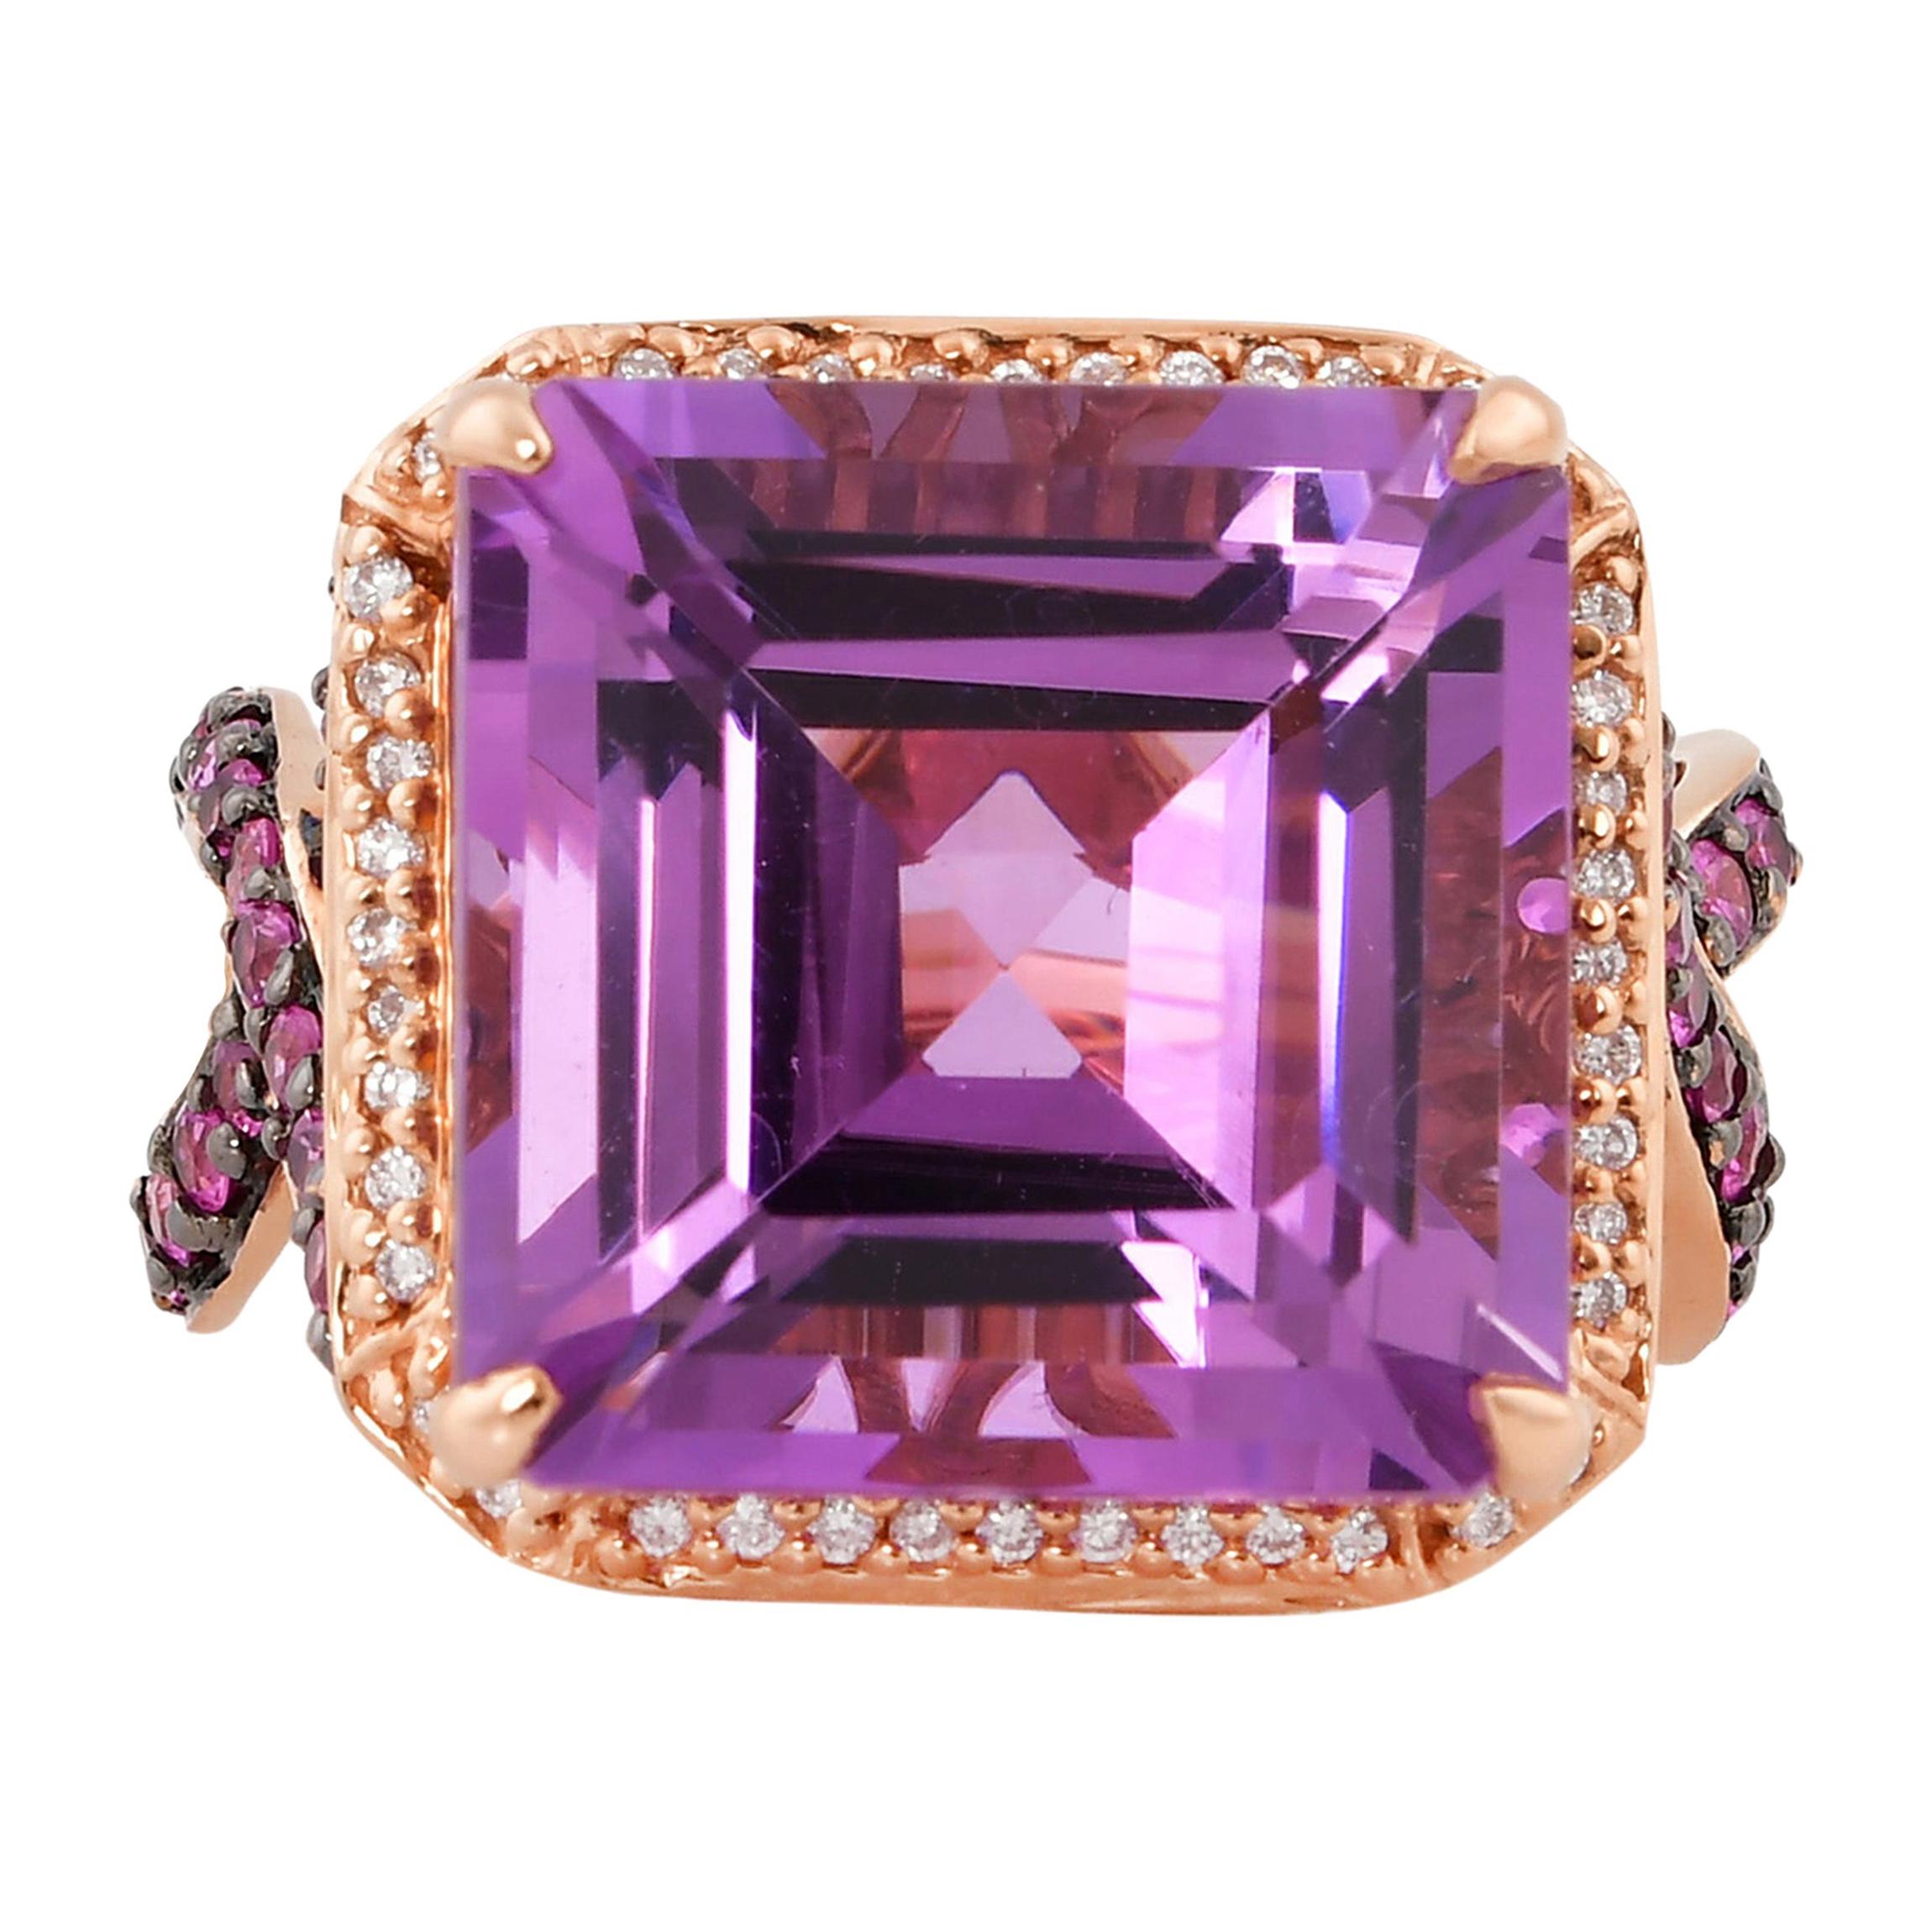 11.6 Carat Amethyst, Pink Sapphire and Diamond Ring in 14 Karat Rose Gold